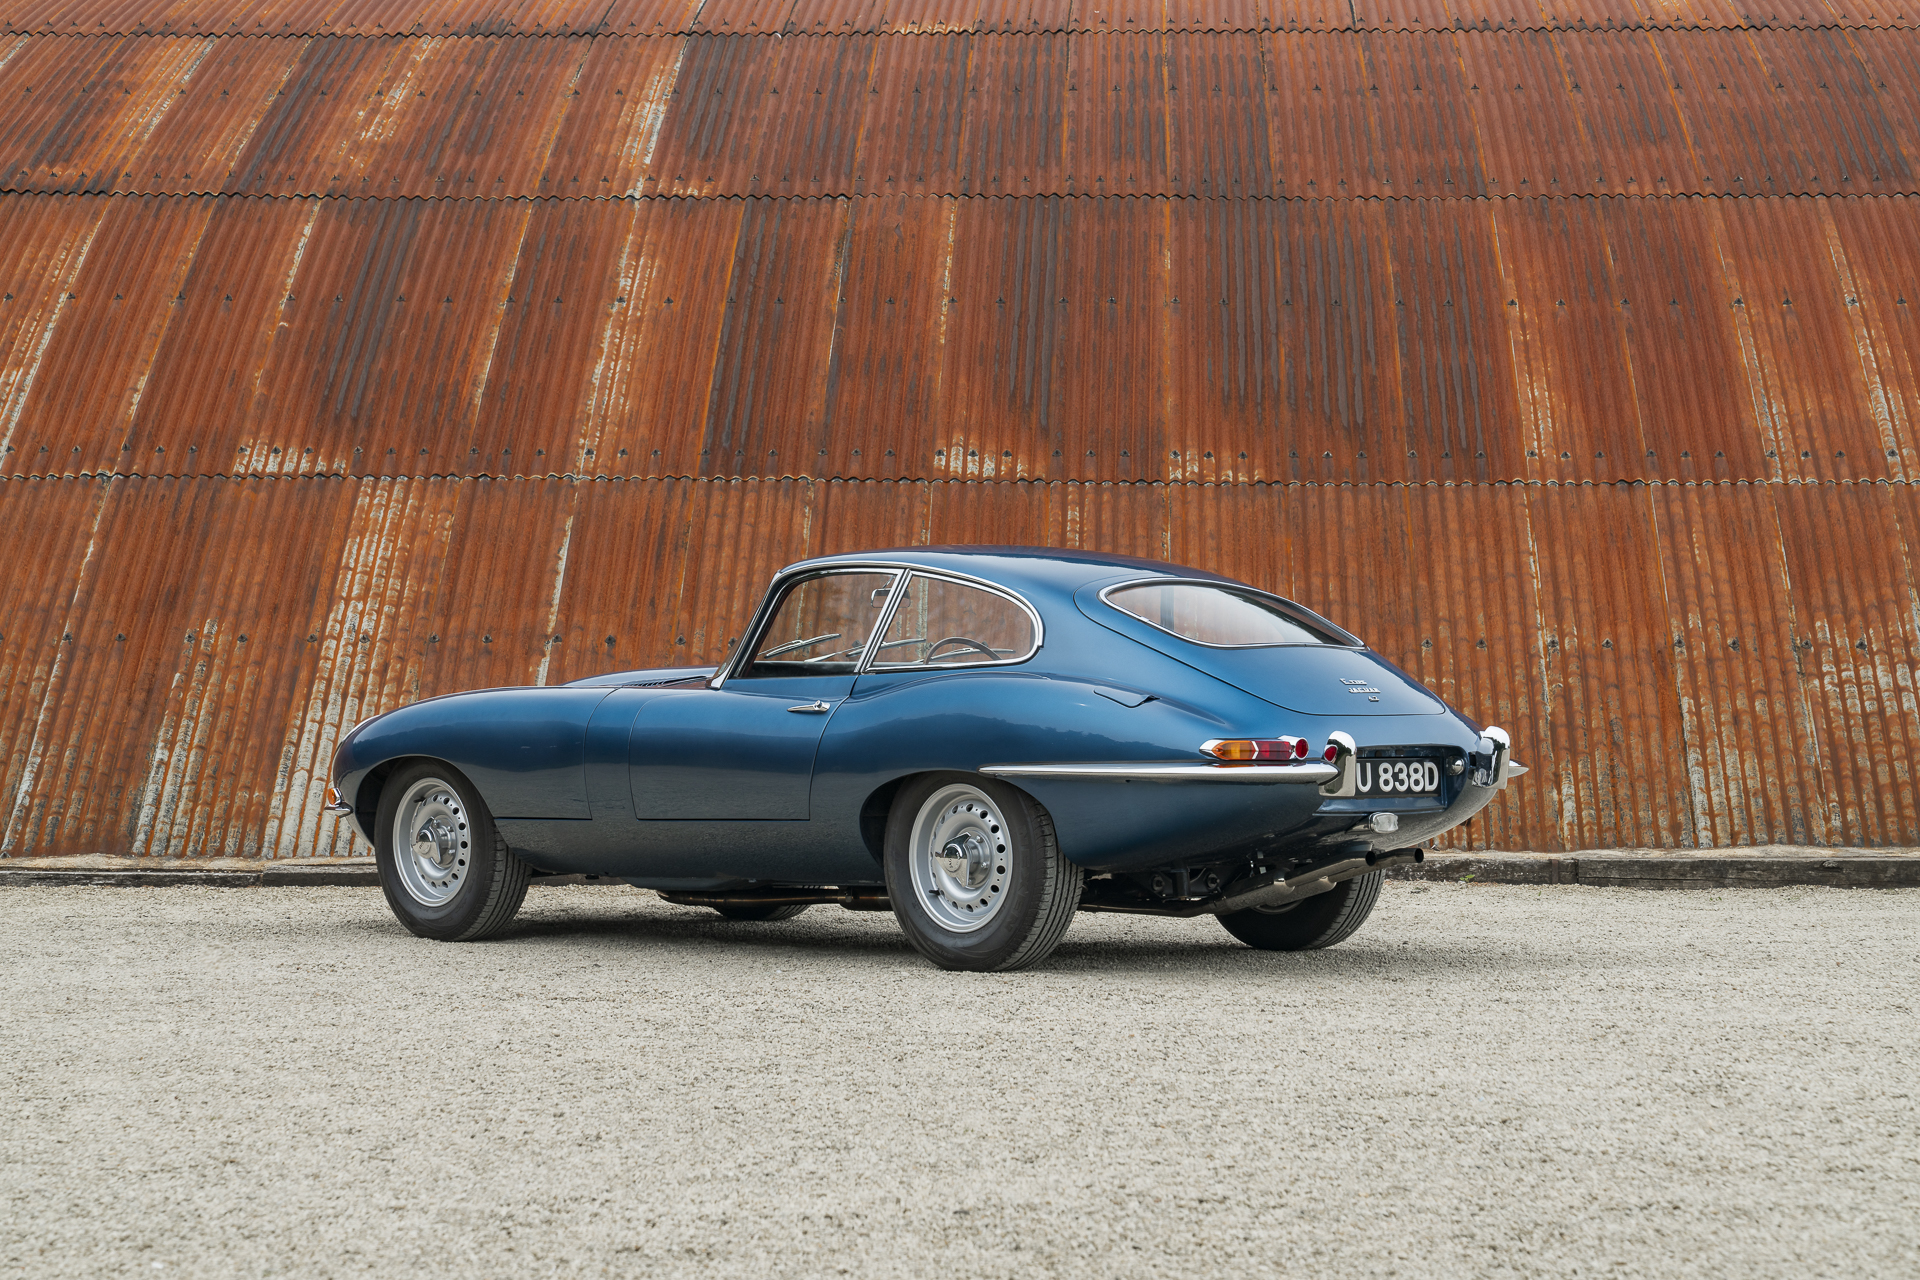 1966 Jaguar E-type 4.2 FHC for sale at The Classic Motor Hub